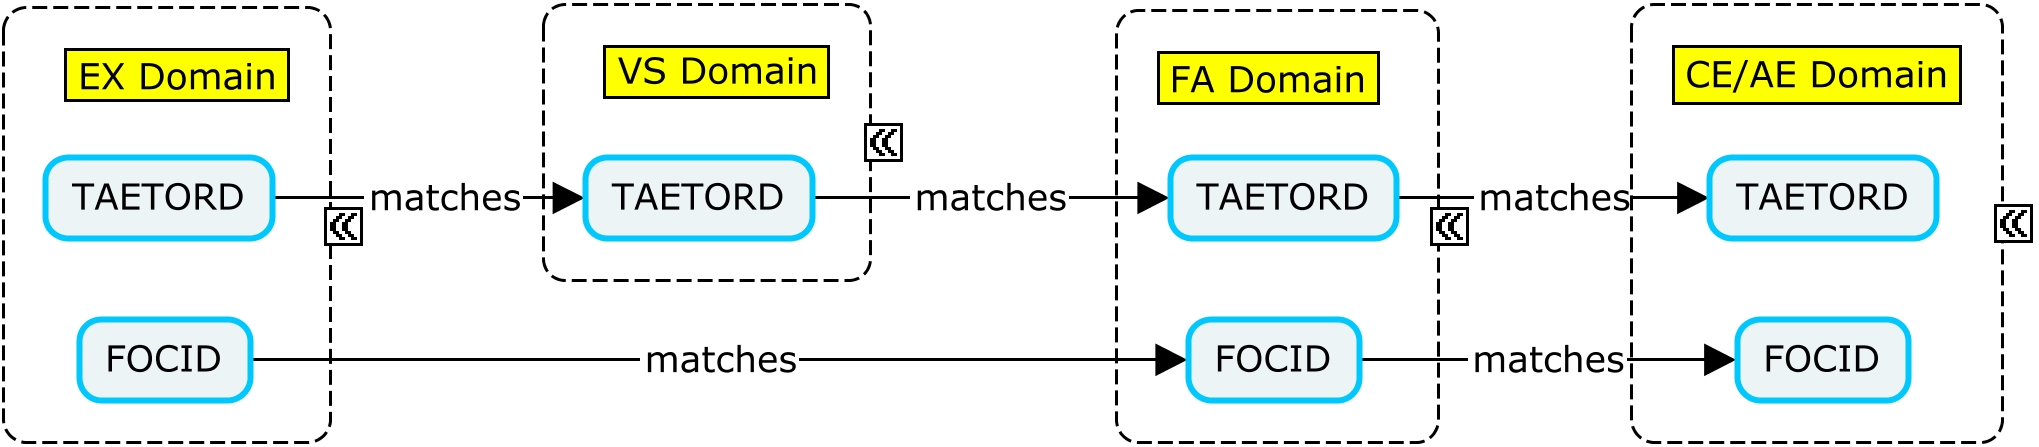 Values for TAETORD match across the EX, VS, FA, and CE/AE domains. Values for FOCID match across the EX, FA, and CE/AE domains.